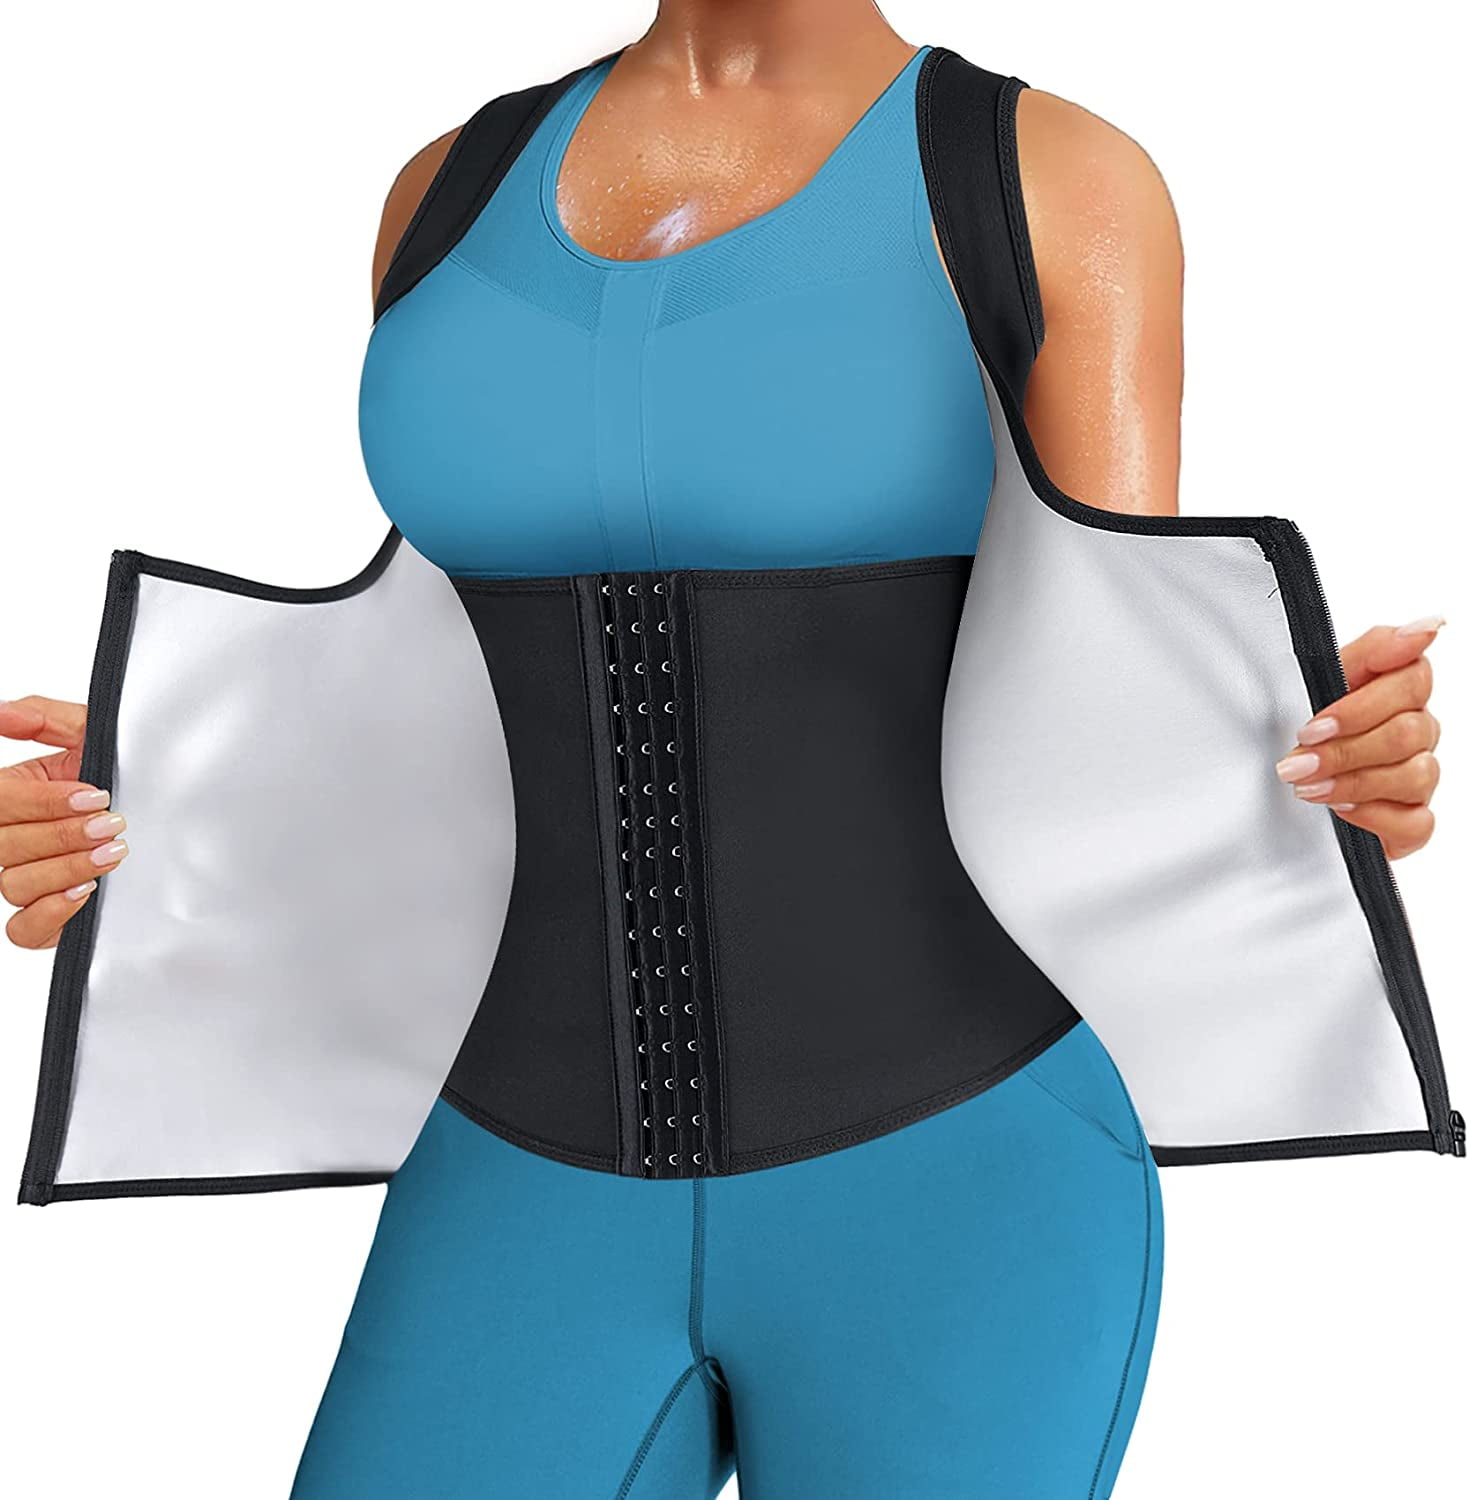 Women Body Shaper Corset Sauna Sweat Suit Sleeve Hot Polymer Waist Trainer Fitness Slimming Workout Vest Top with Zipper 